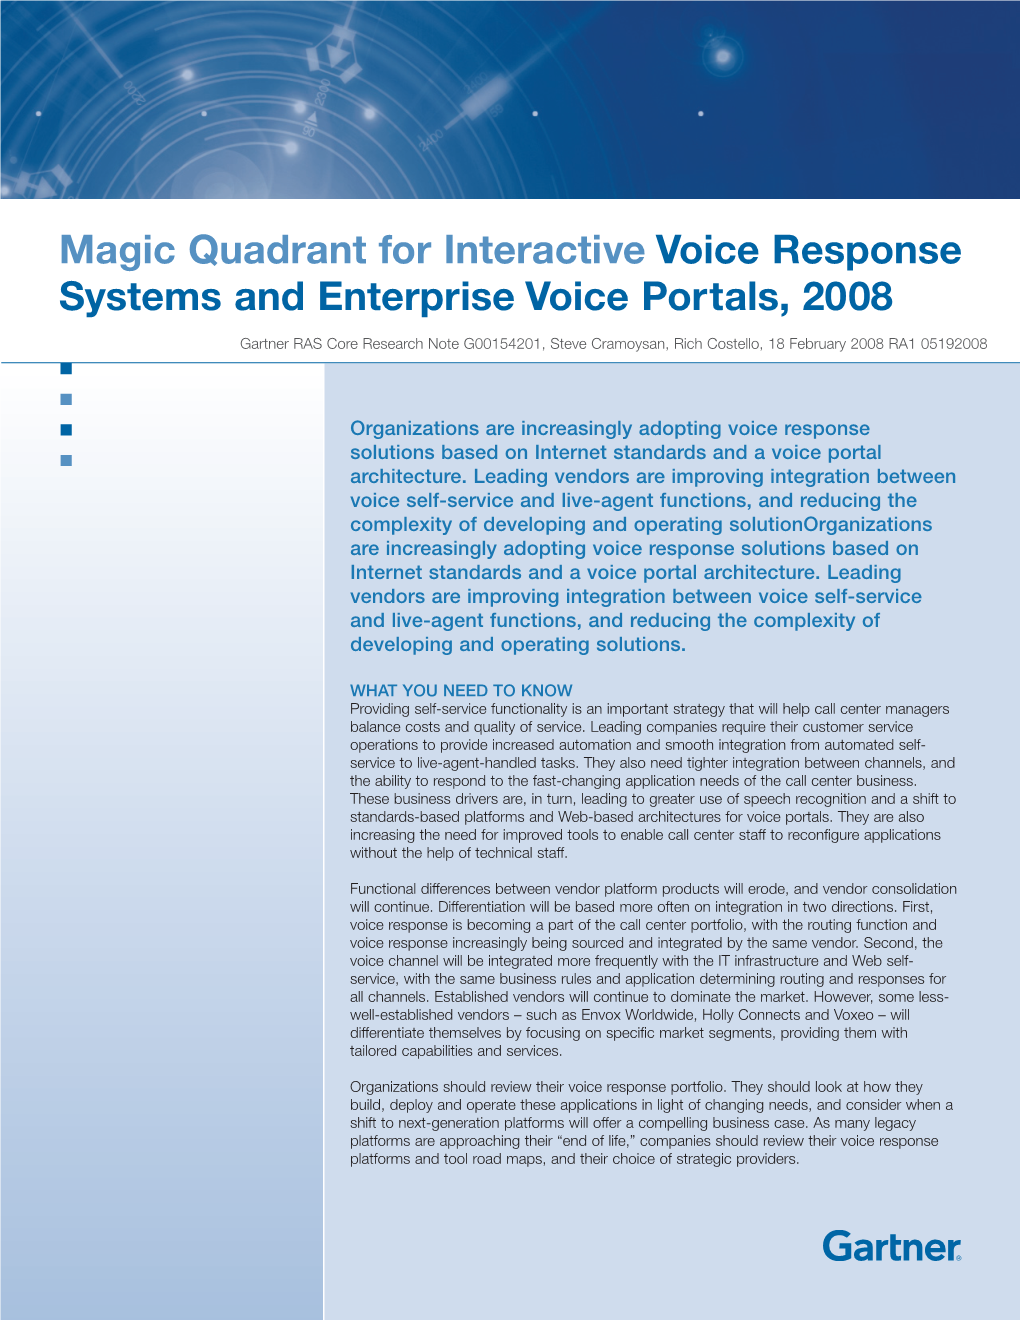 Magic Quadrant for Interactive Voice Response Systems and Enterprise Voice Portals, 2008